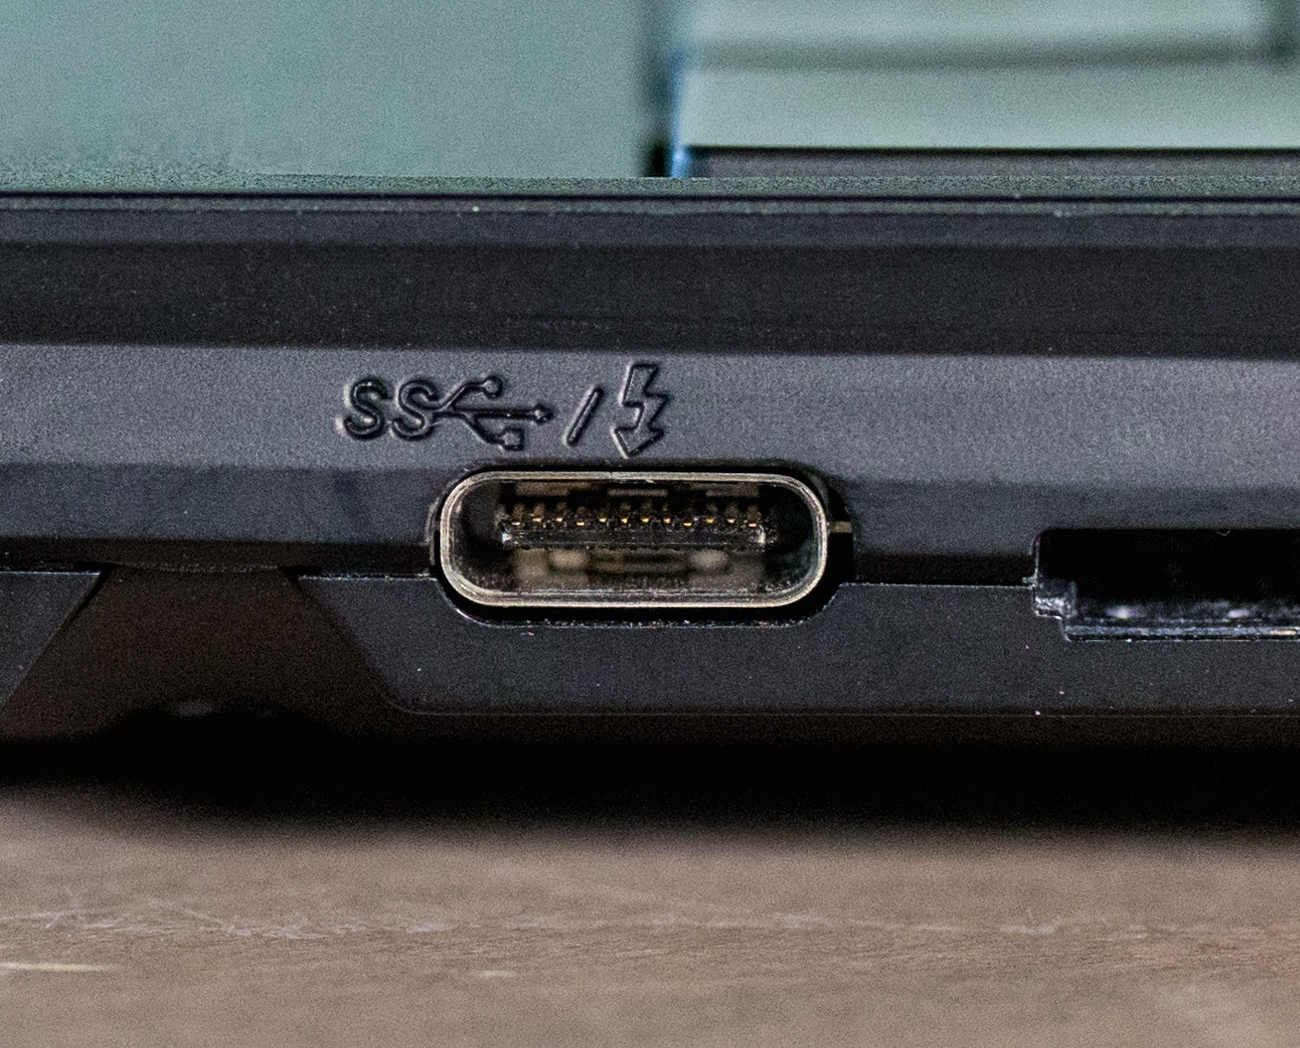 Port USB-C